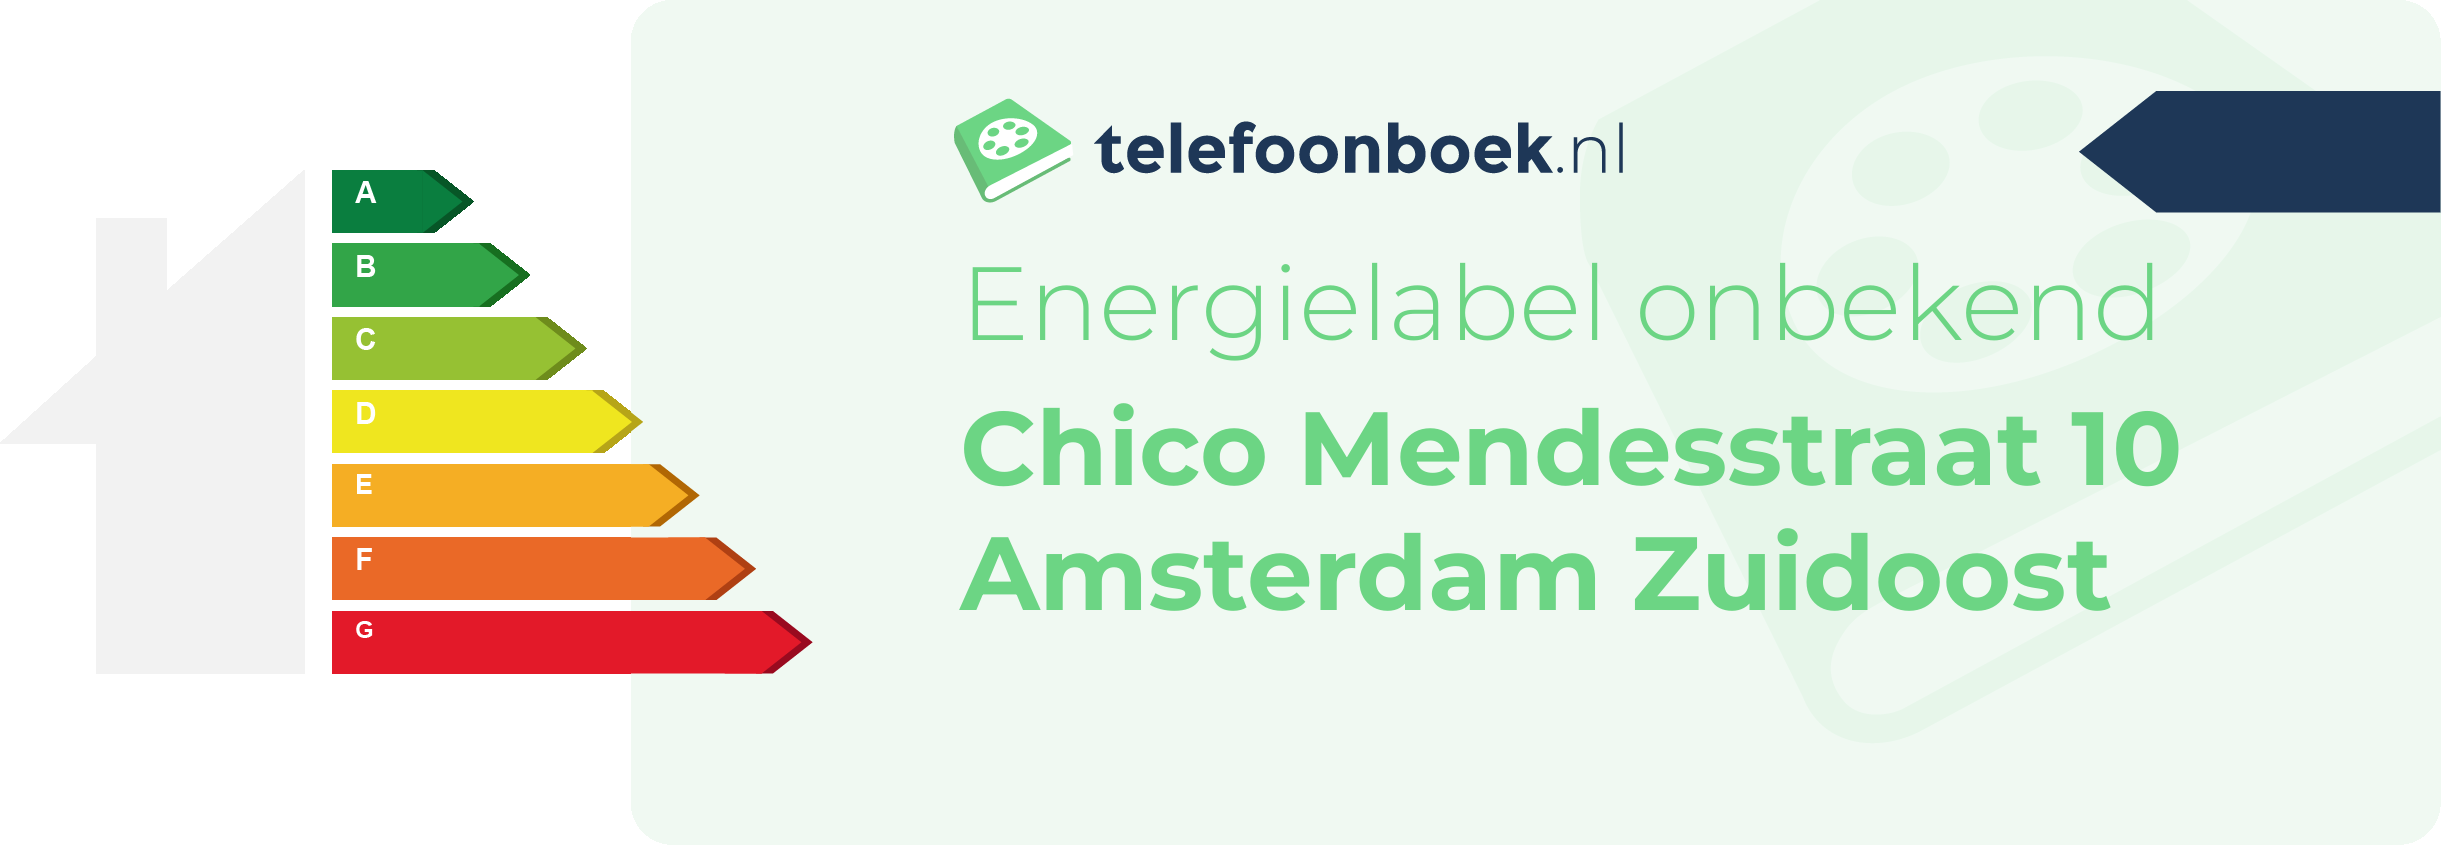 Energielabel Chico Mendesstraat 10 Amsterdam Zuidoost